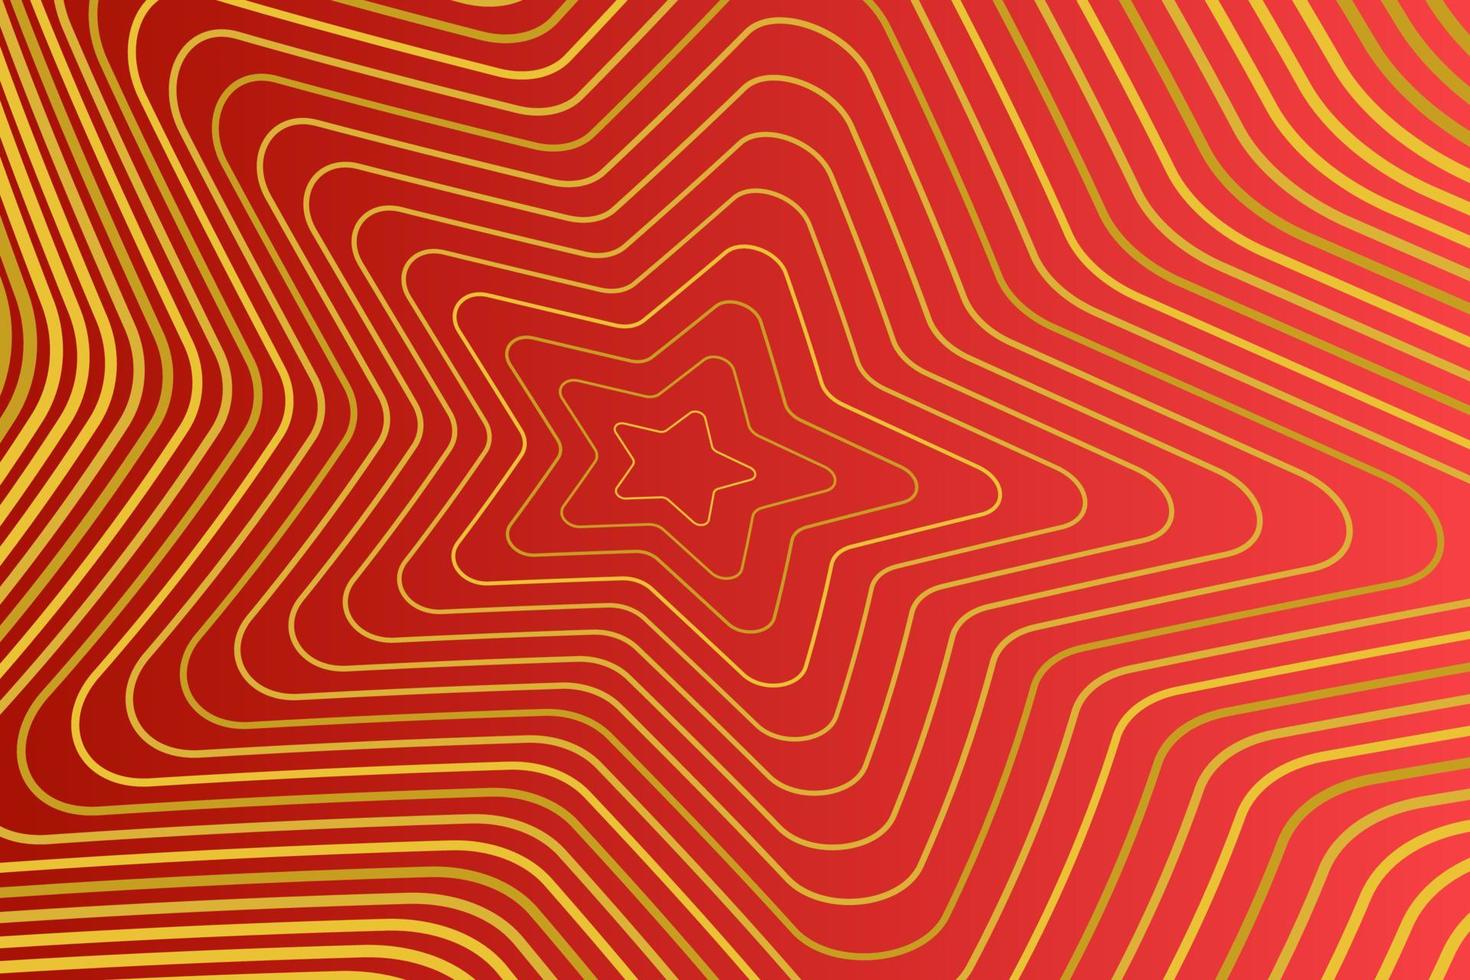 mönster med geometrisk element i röd toner med gyllene Ränder. abstrakt lutning bakgrund vektor